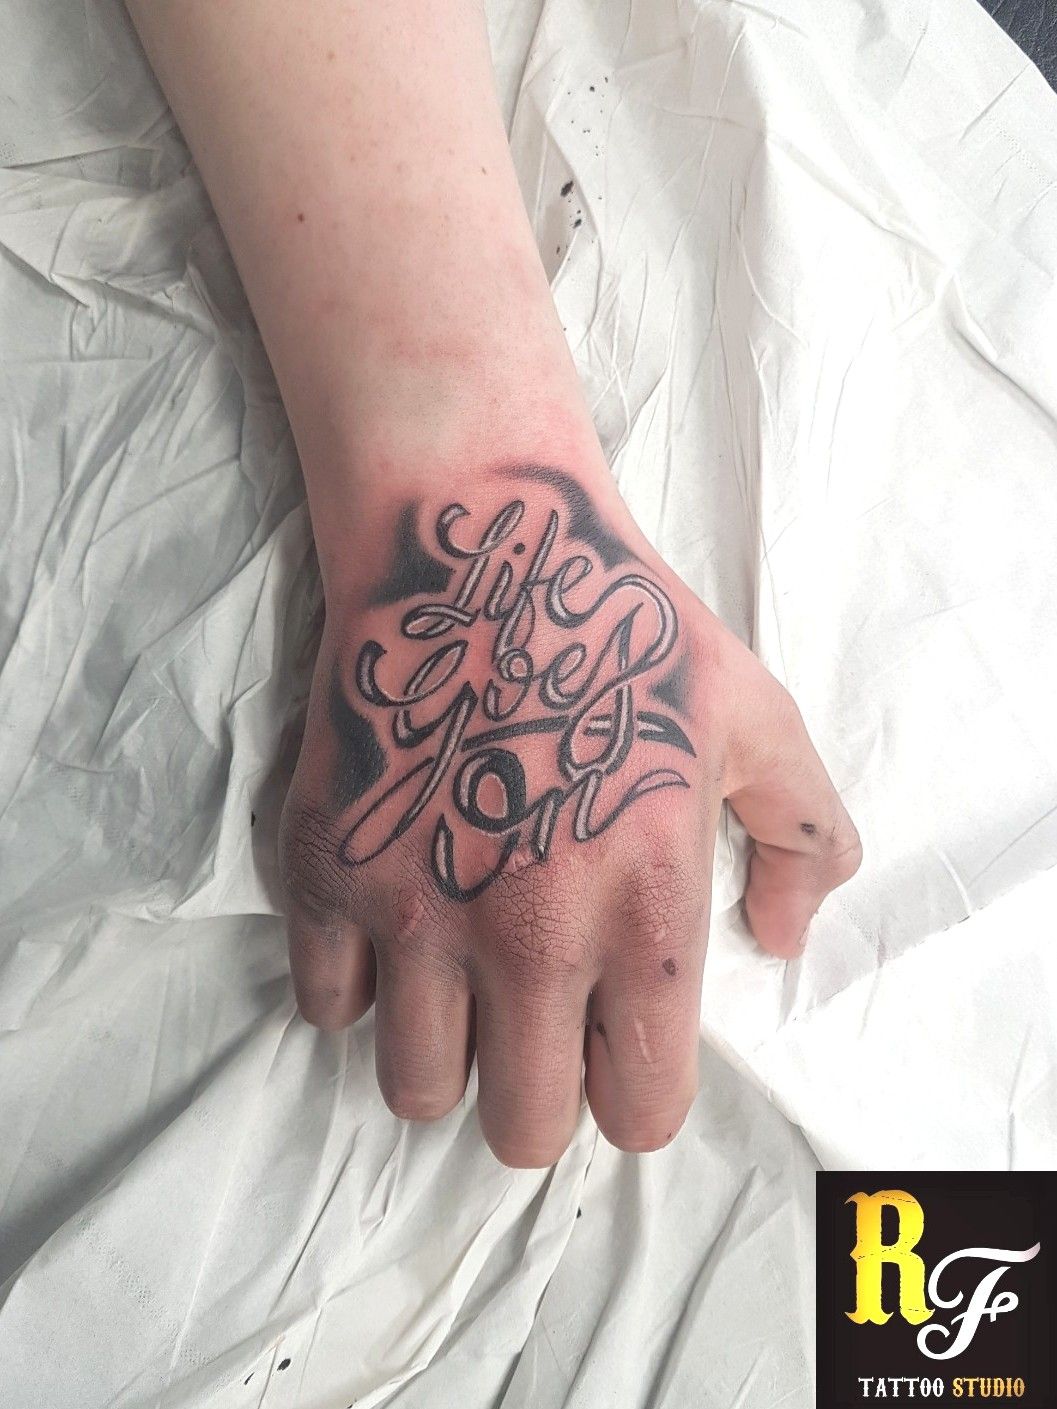 Tattoo uploaded by Ash Wakeman  Life Goes On handtattoo  Tattoodo